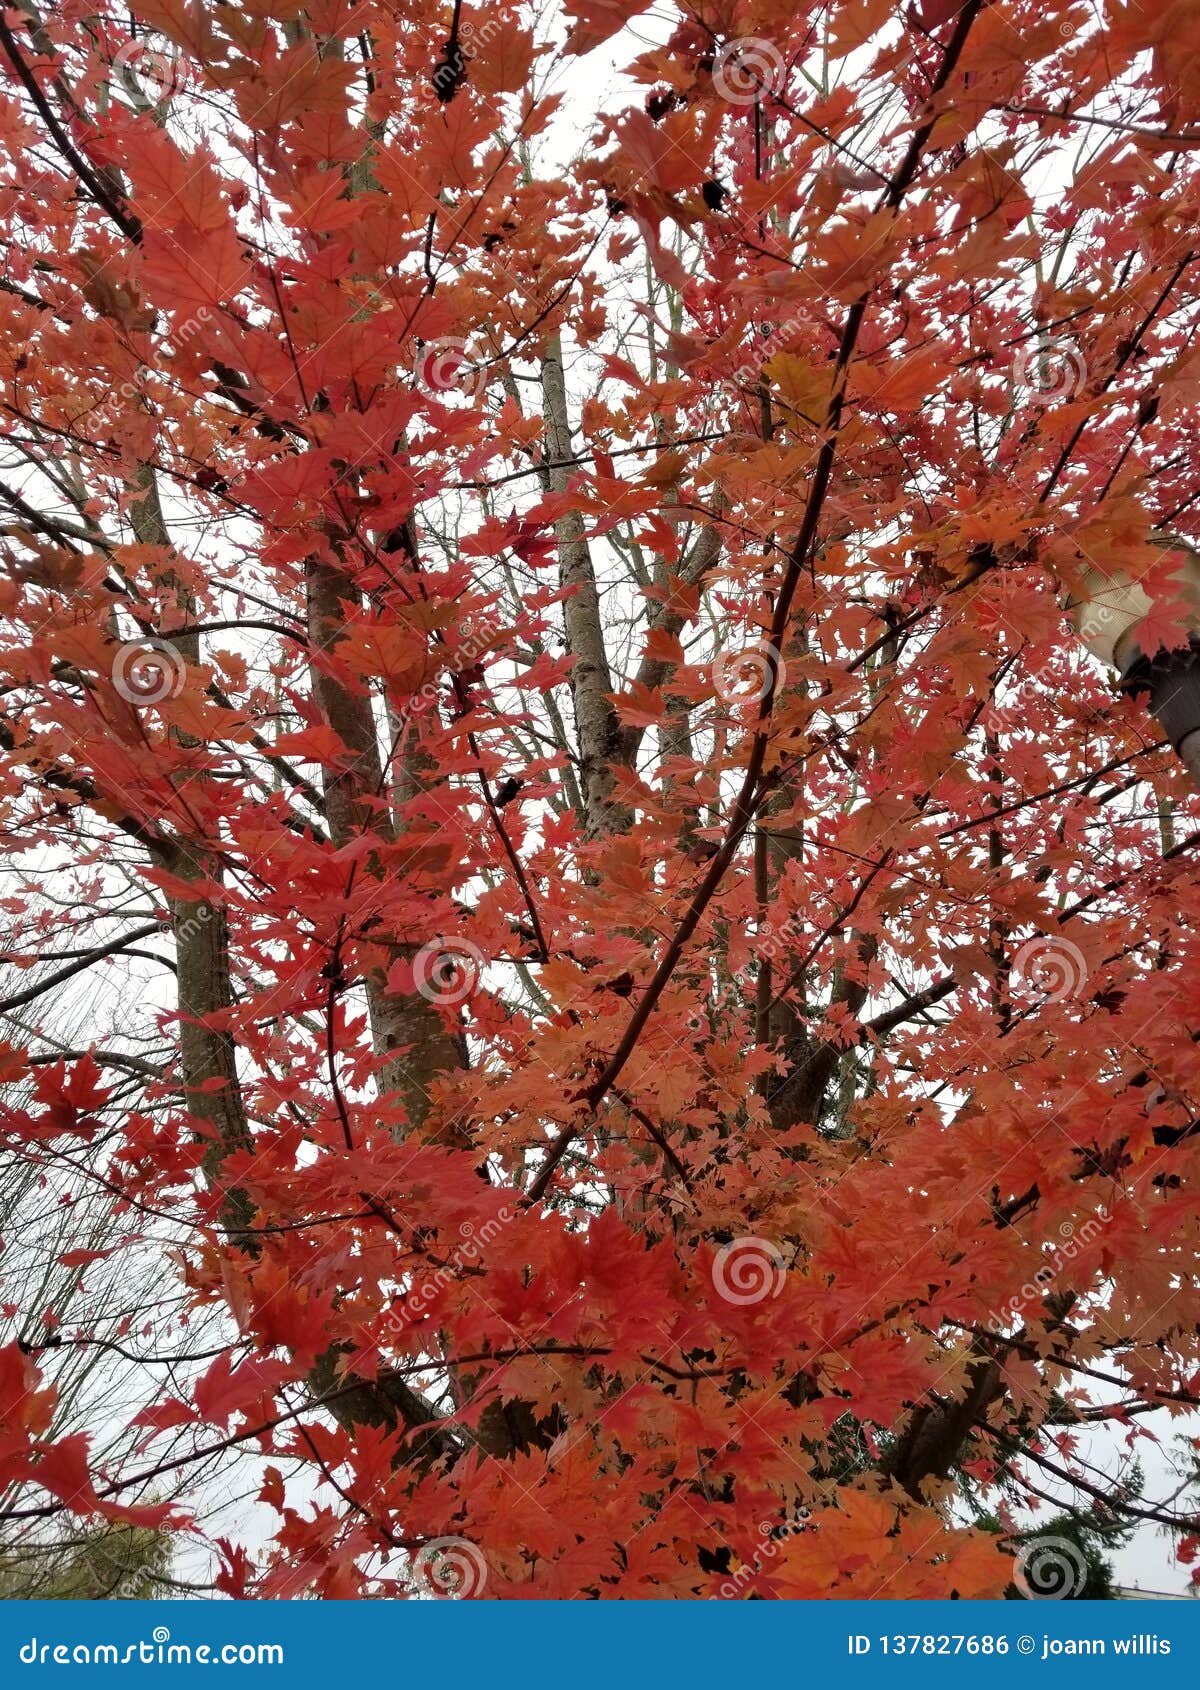 Changing seasons stock photo. Image of leafs, season - 137827686